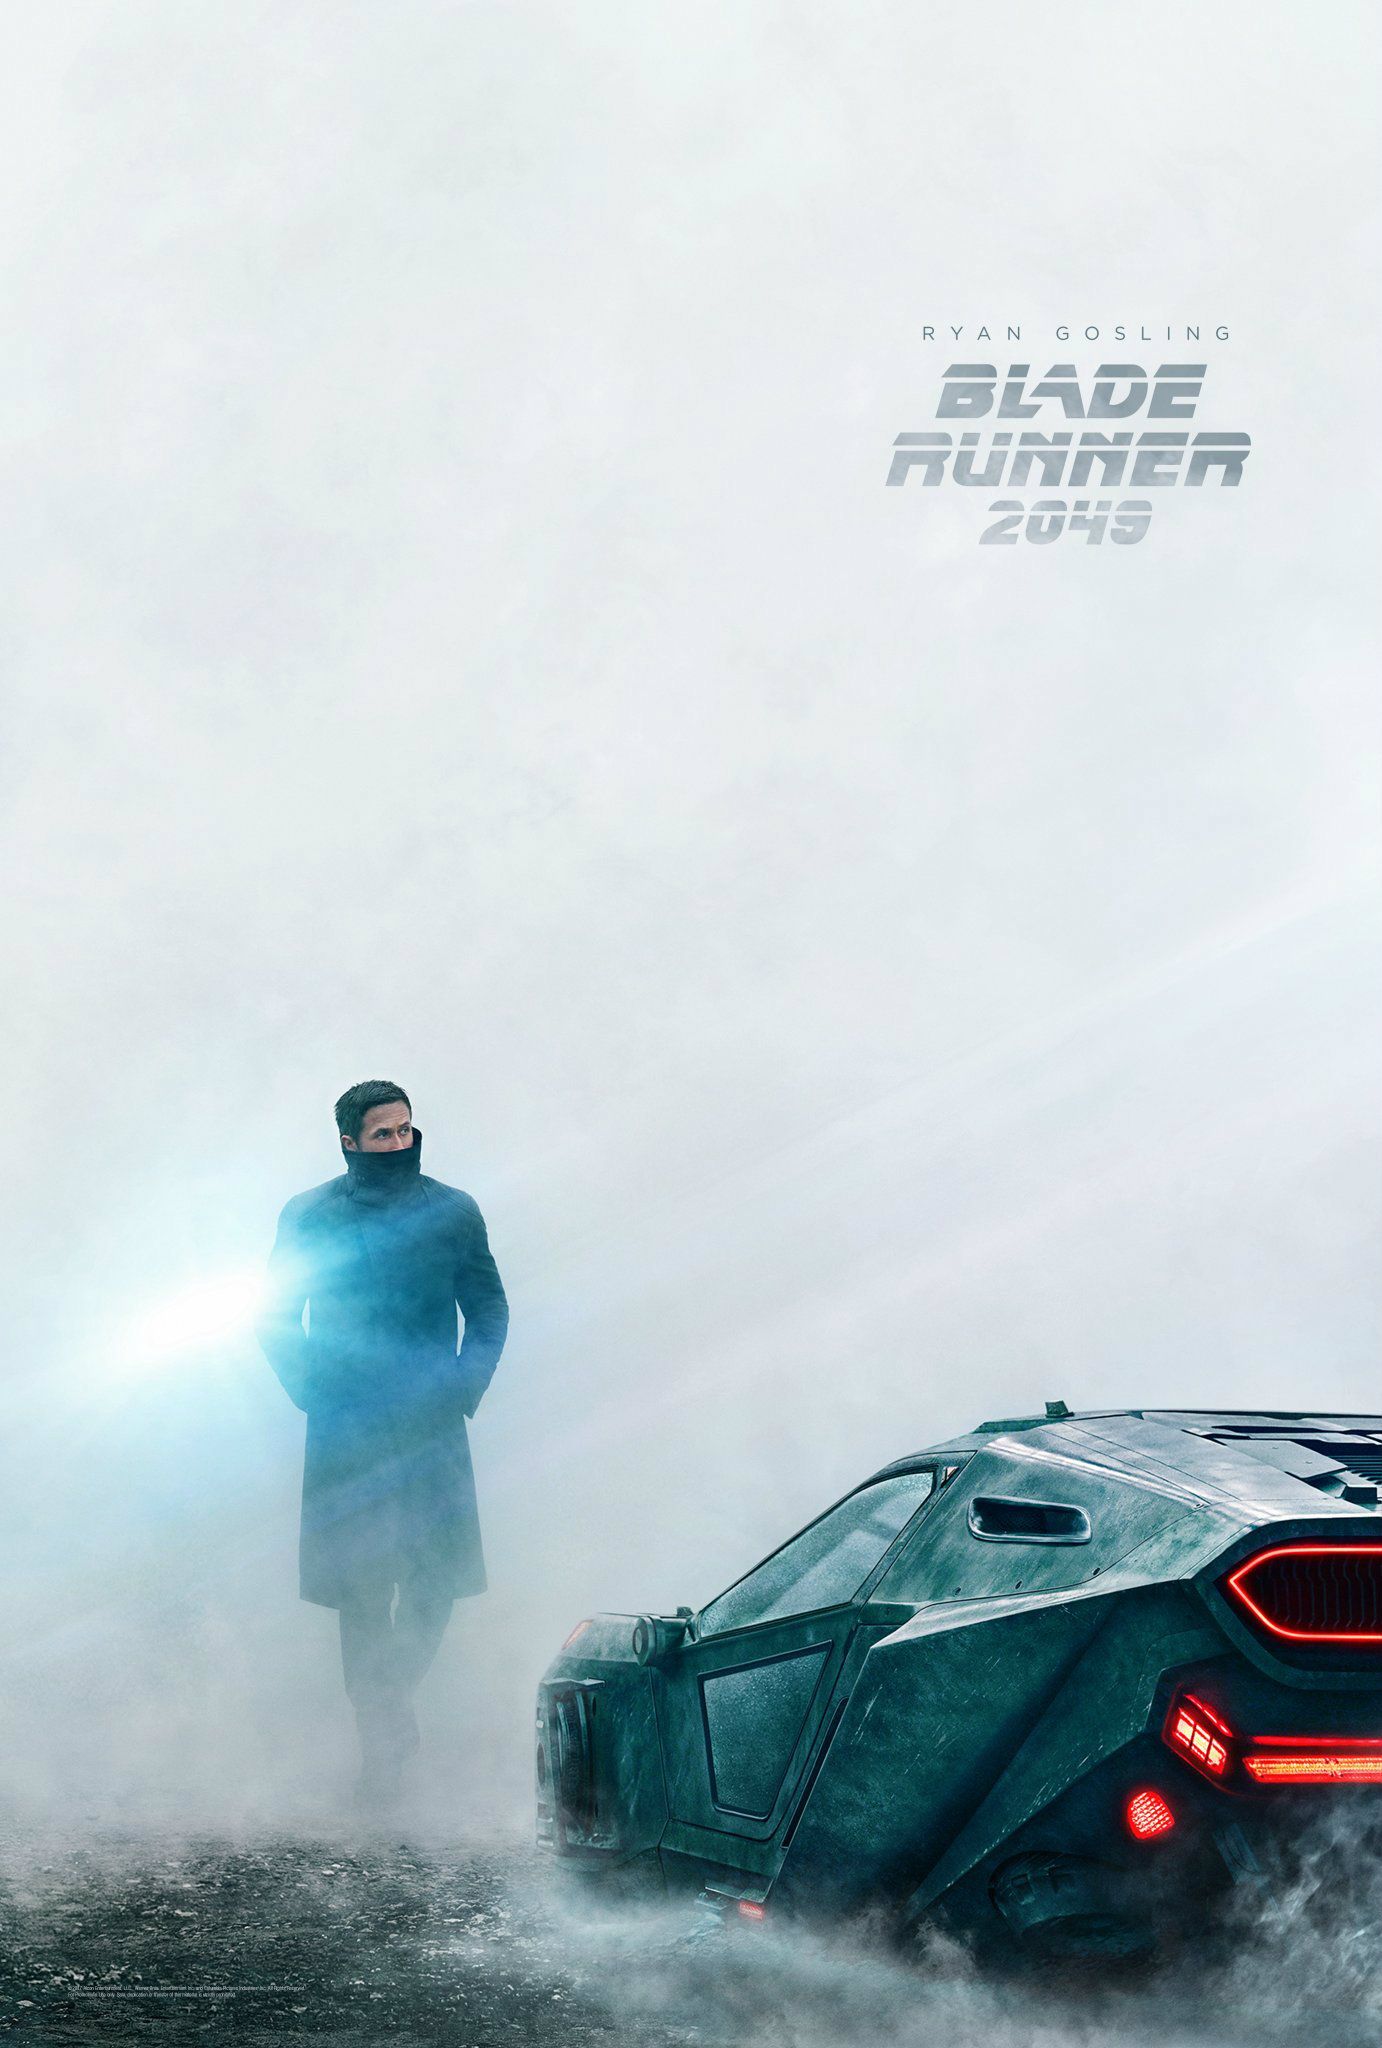 Blade Runner 2049 Poster with Ryan Gosling